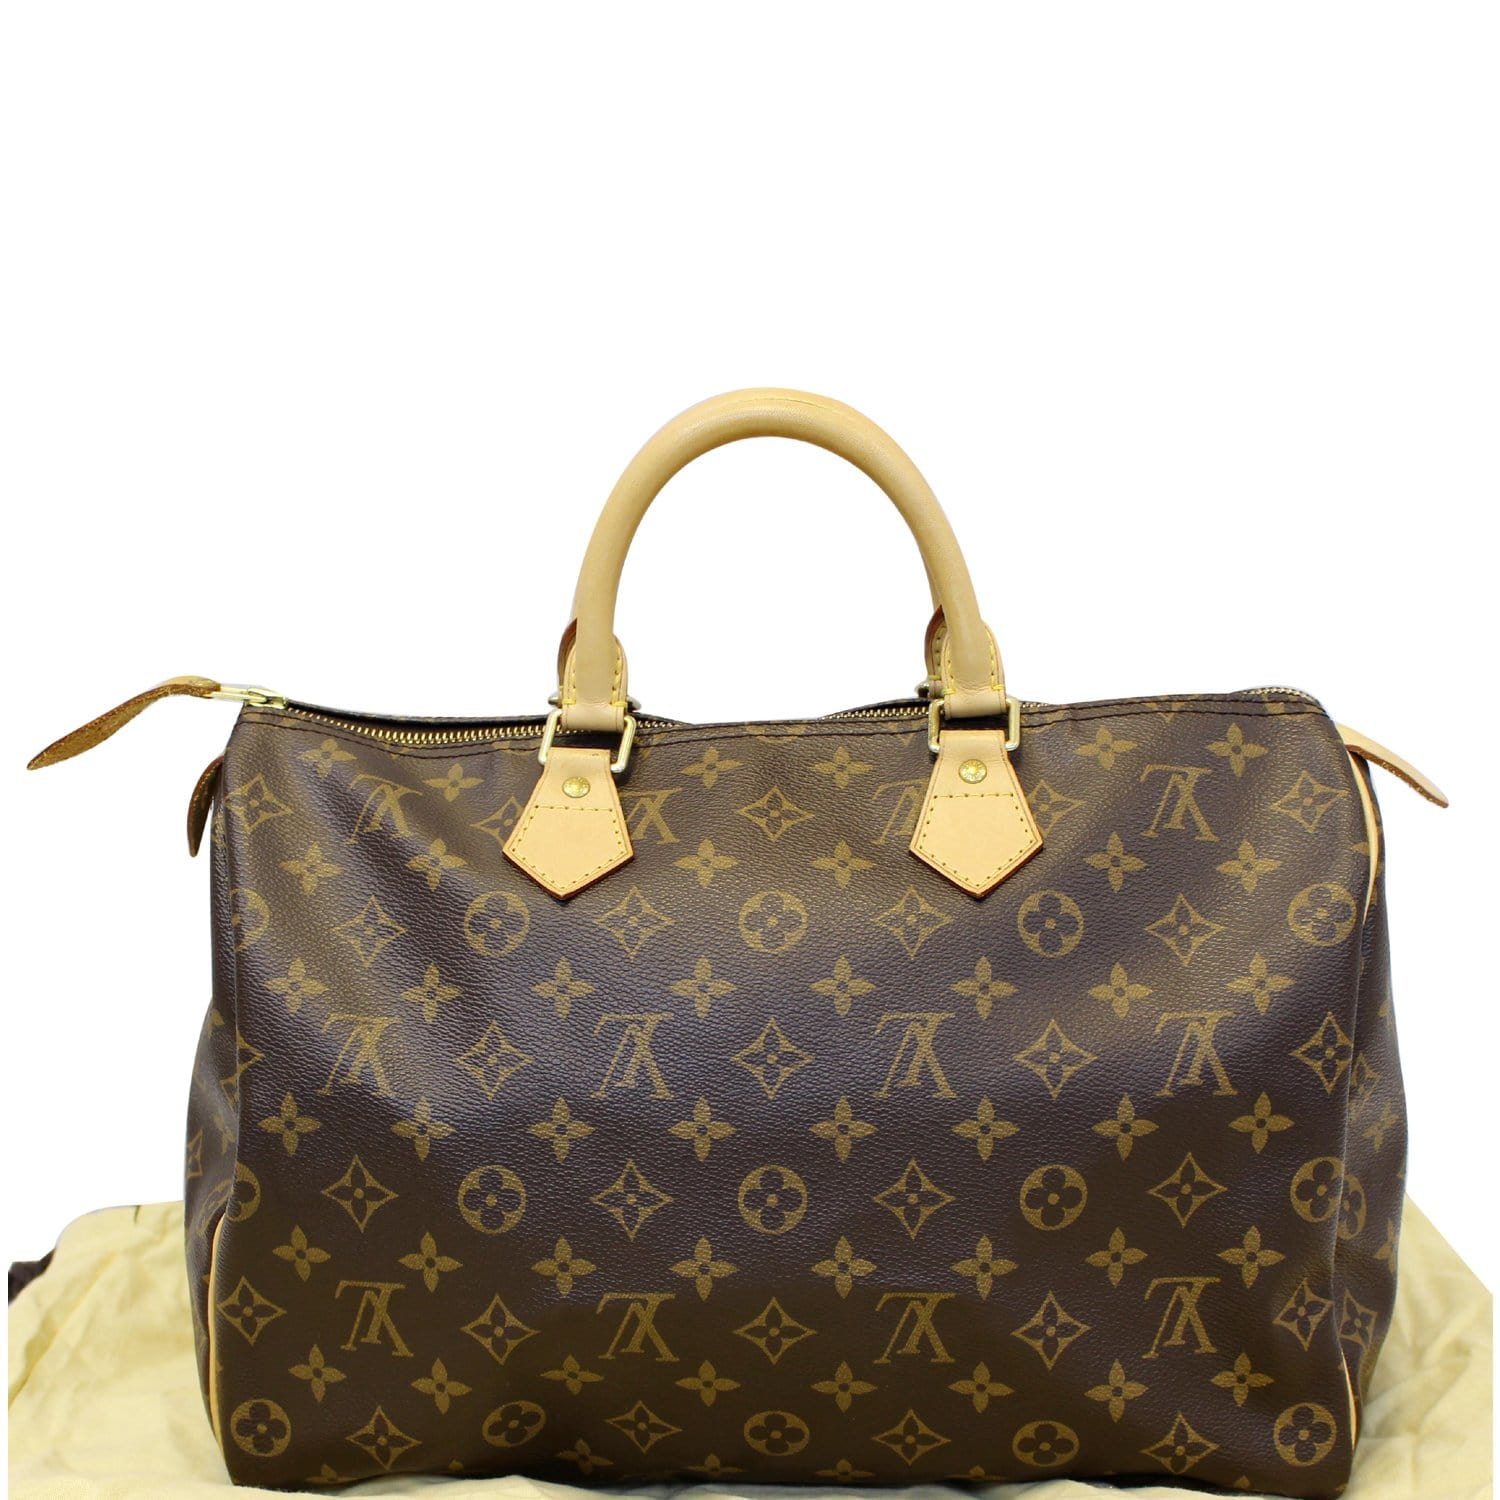 Louis Vuitton Speedy 35 - Lv Monogram Canvas Satchel Bag